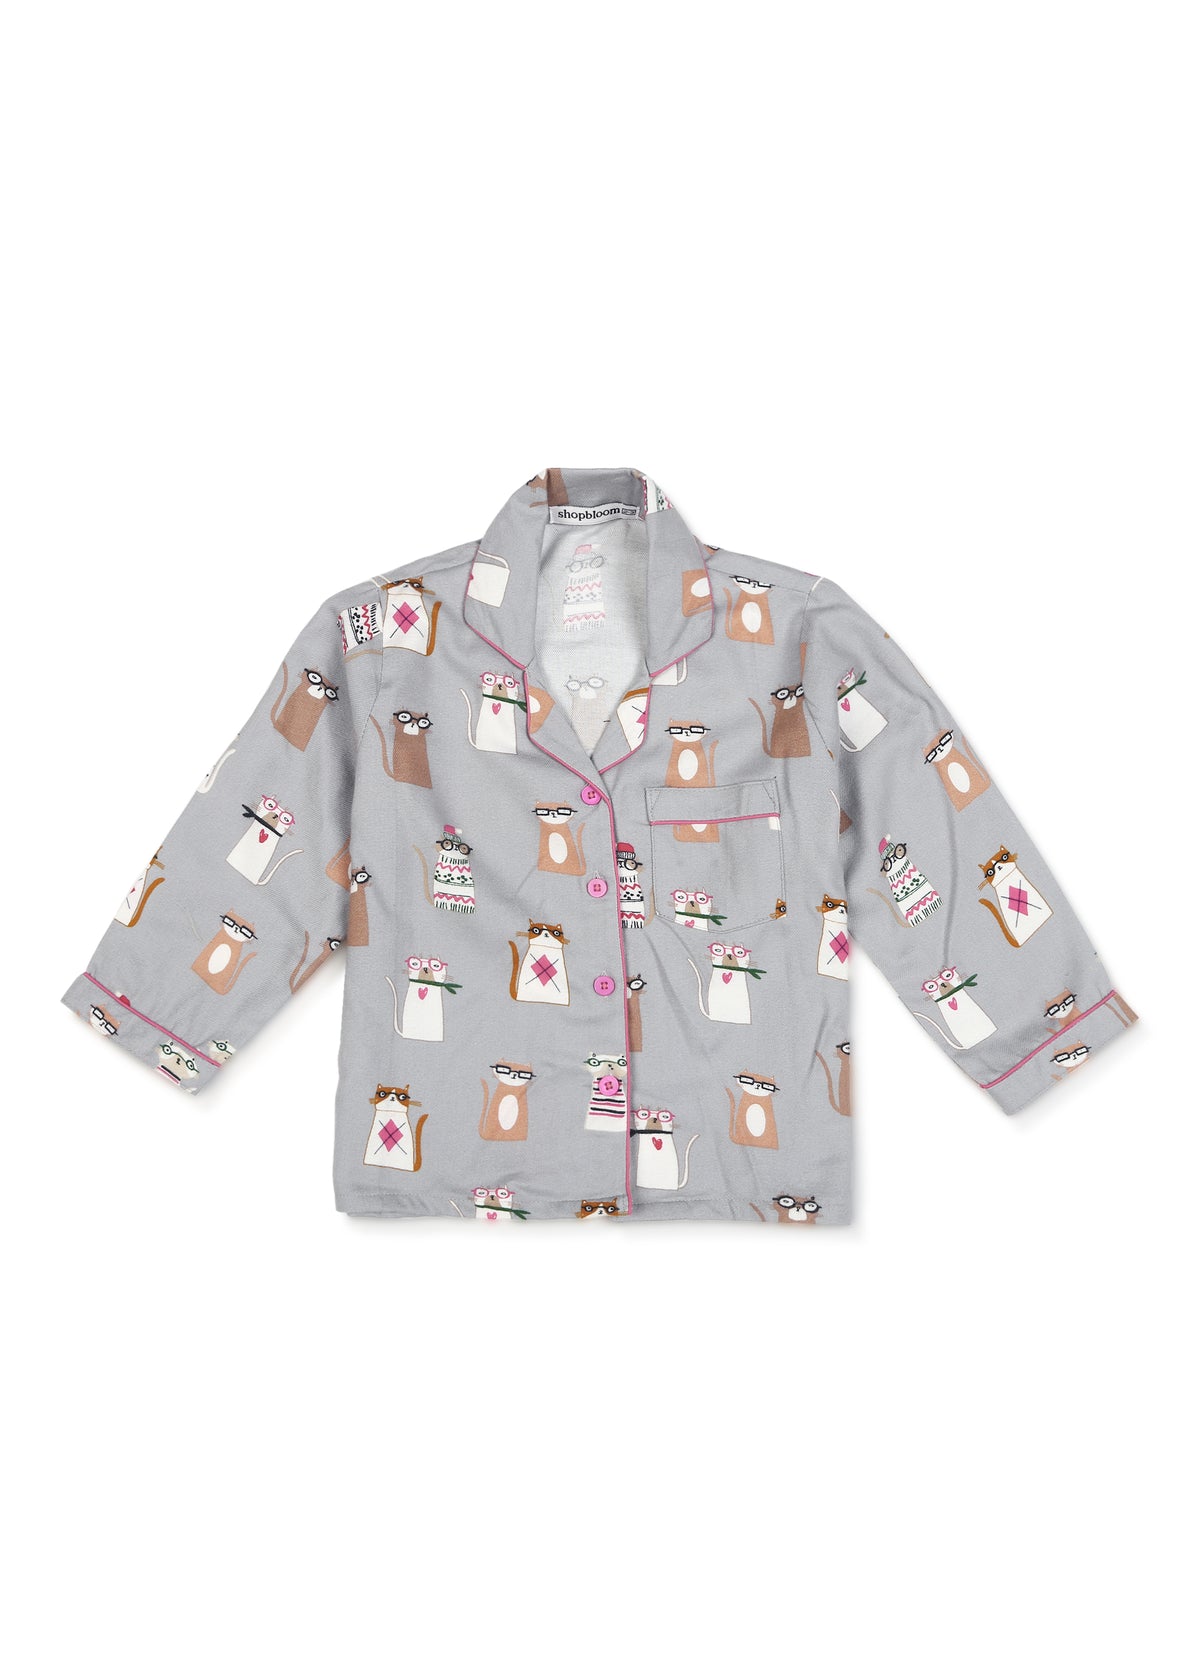 Kitty Print Cotton Flannel Long Sleeve Kid's Night Suit - Shopbloom